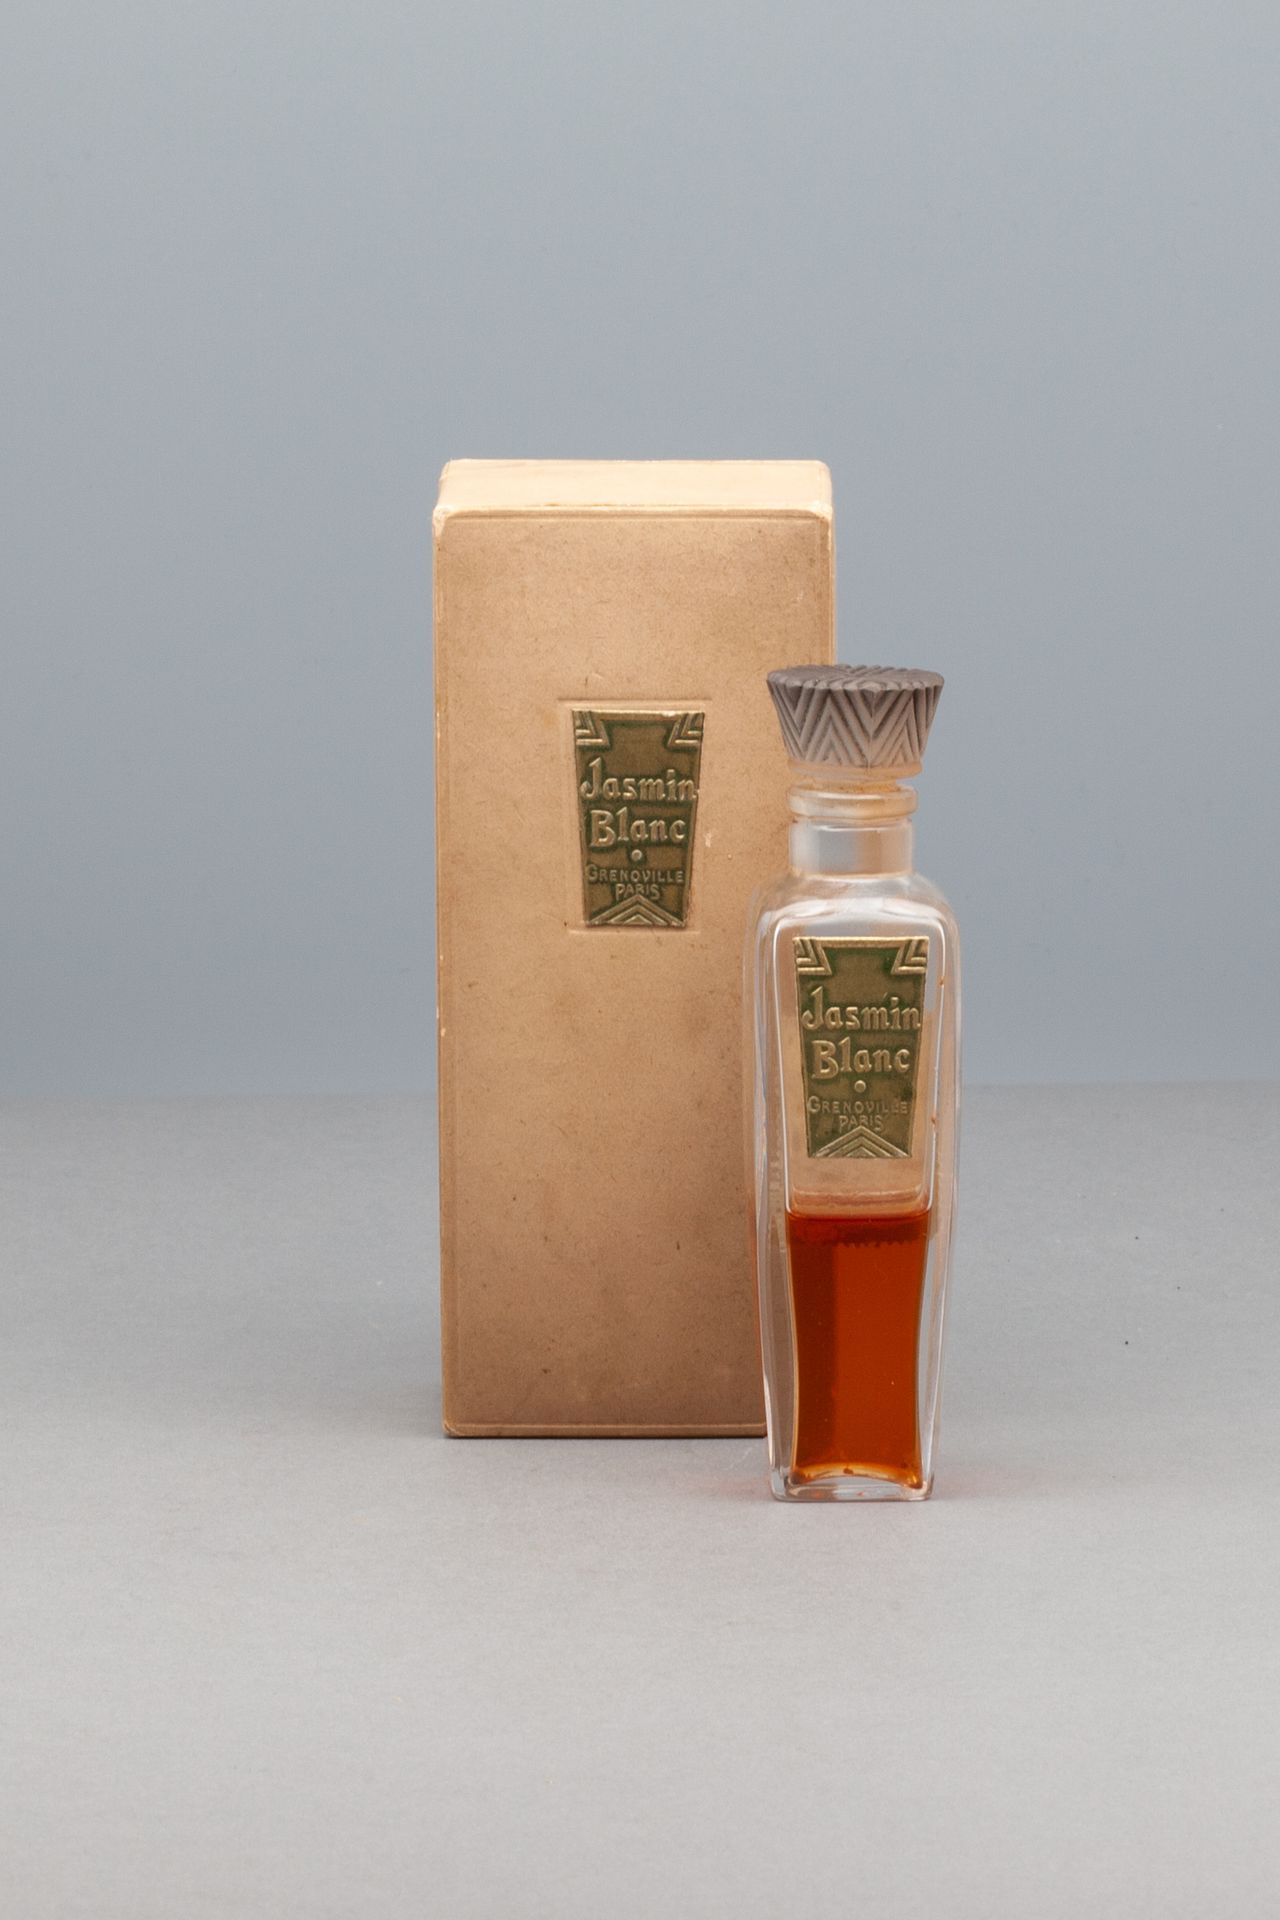 GRENOVILLE "JASMIN BLANC" 玻璃瓶，金色标签。风格化的塞子。在其标题的盒子里。高12厘米 - 盒子尺寸14x5,7厘米